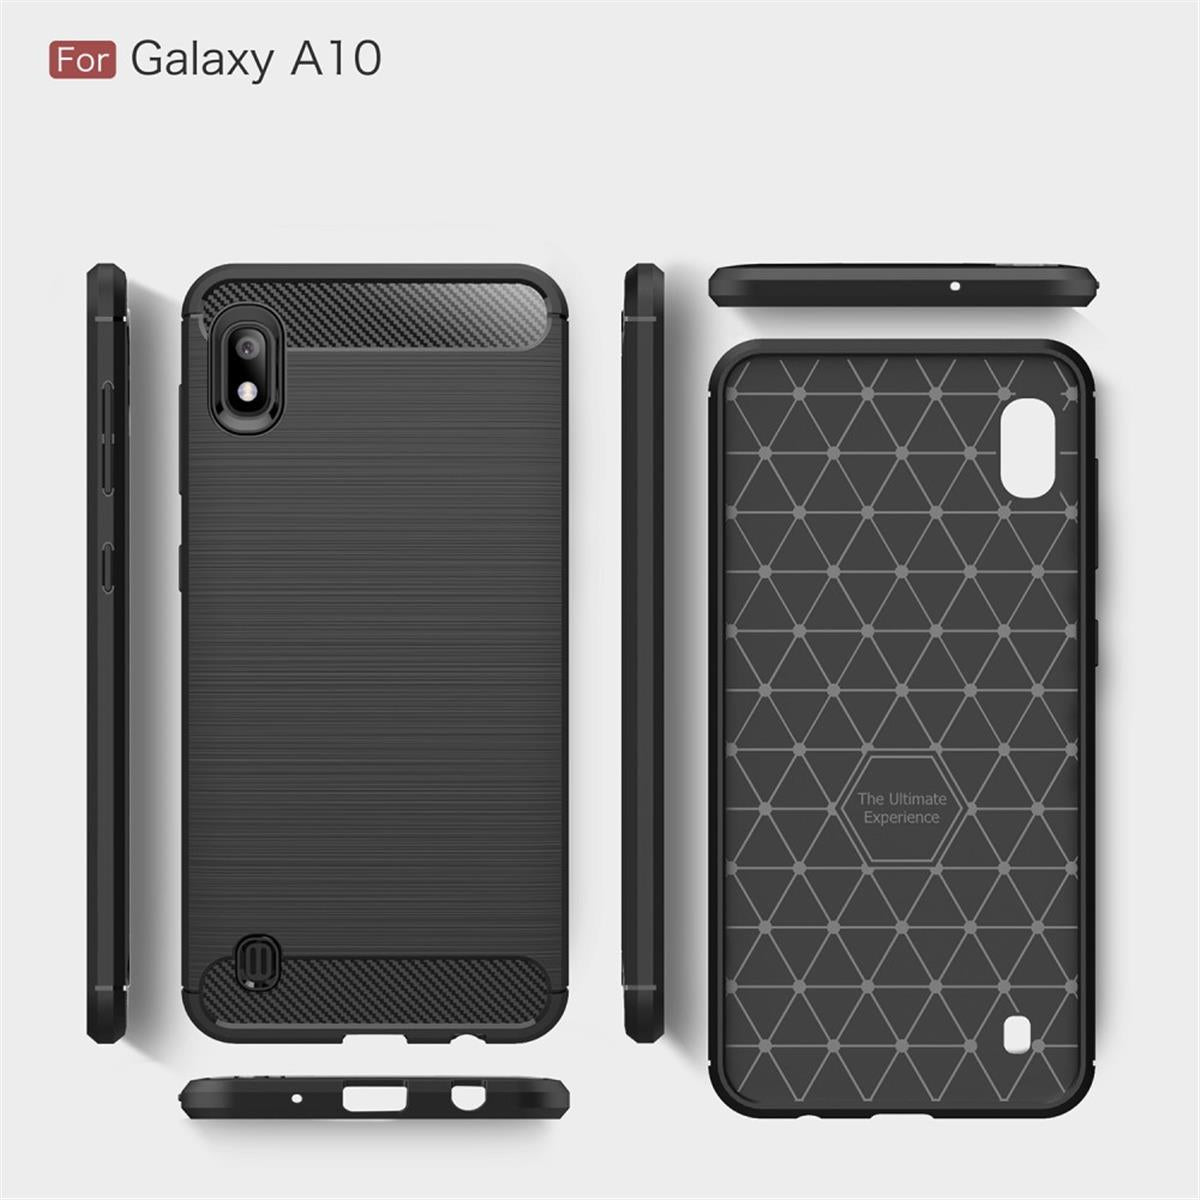 Hülle für Samsung Galaxy A10 Handyhülle Schutzhülle Silikon Case Carbon farben